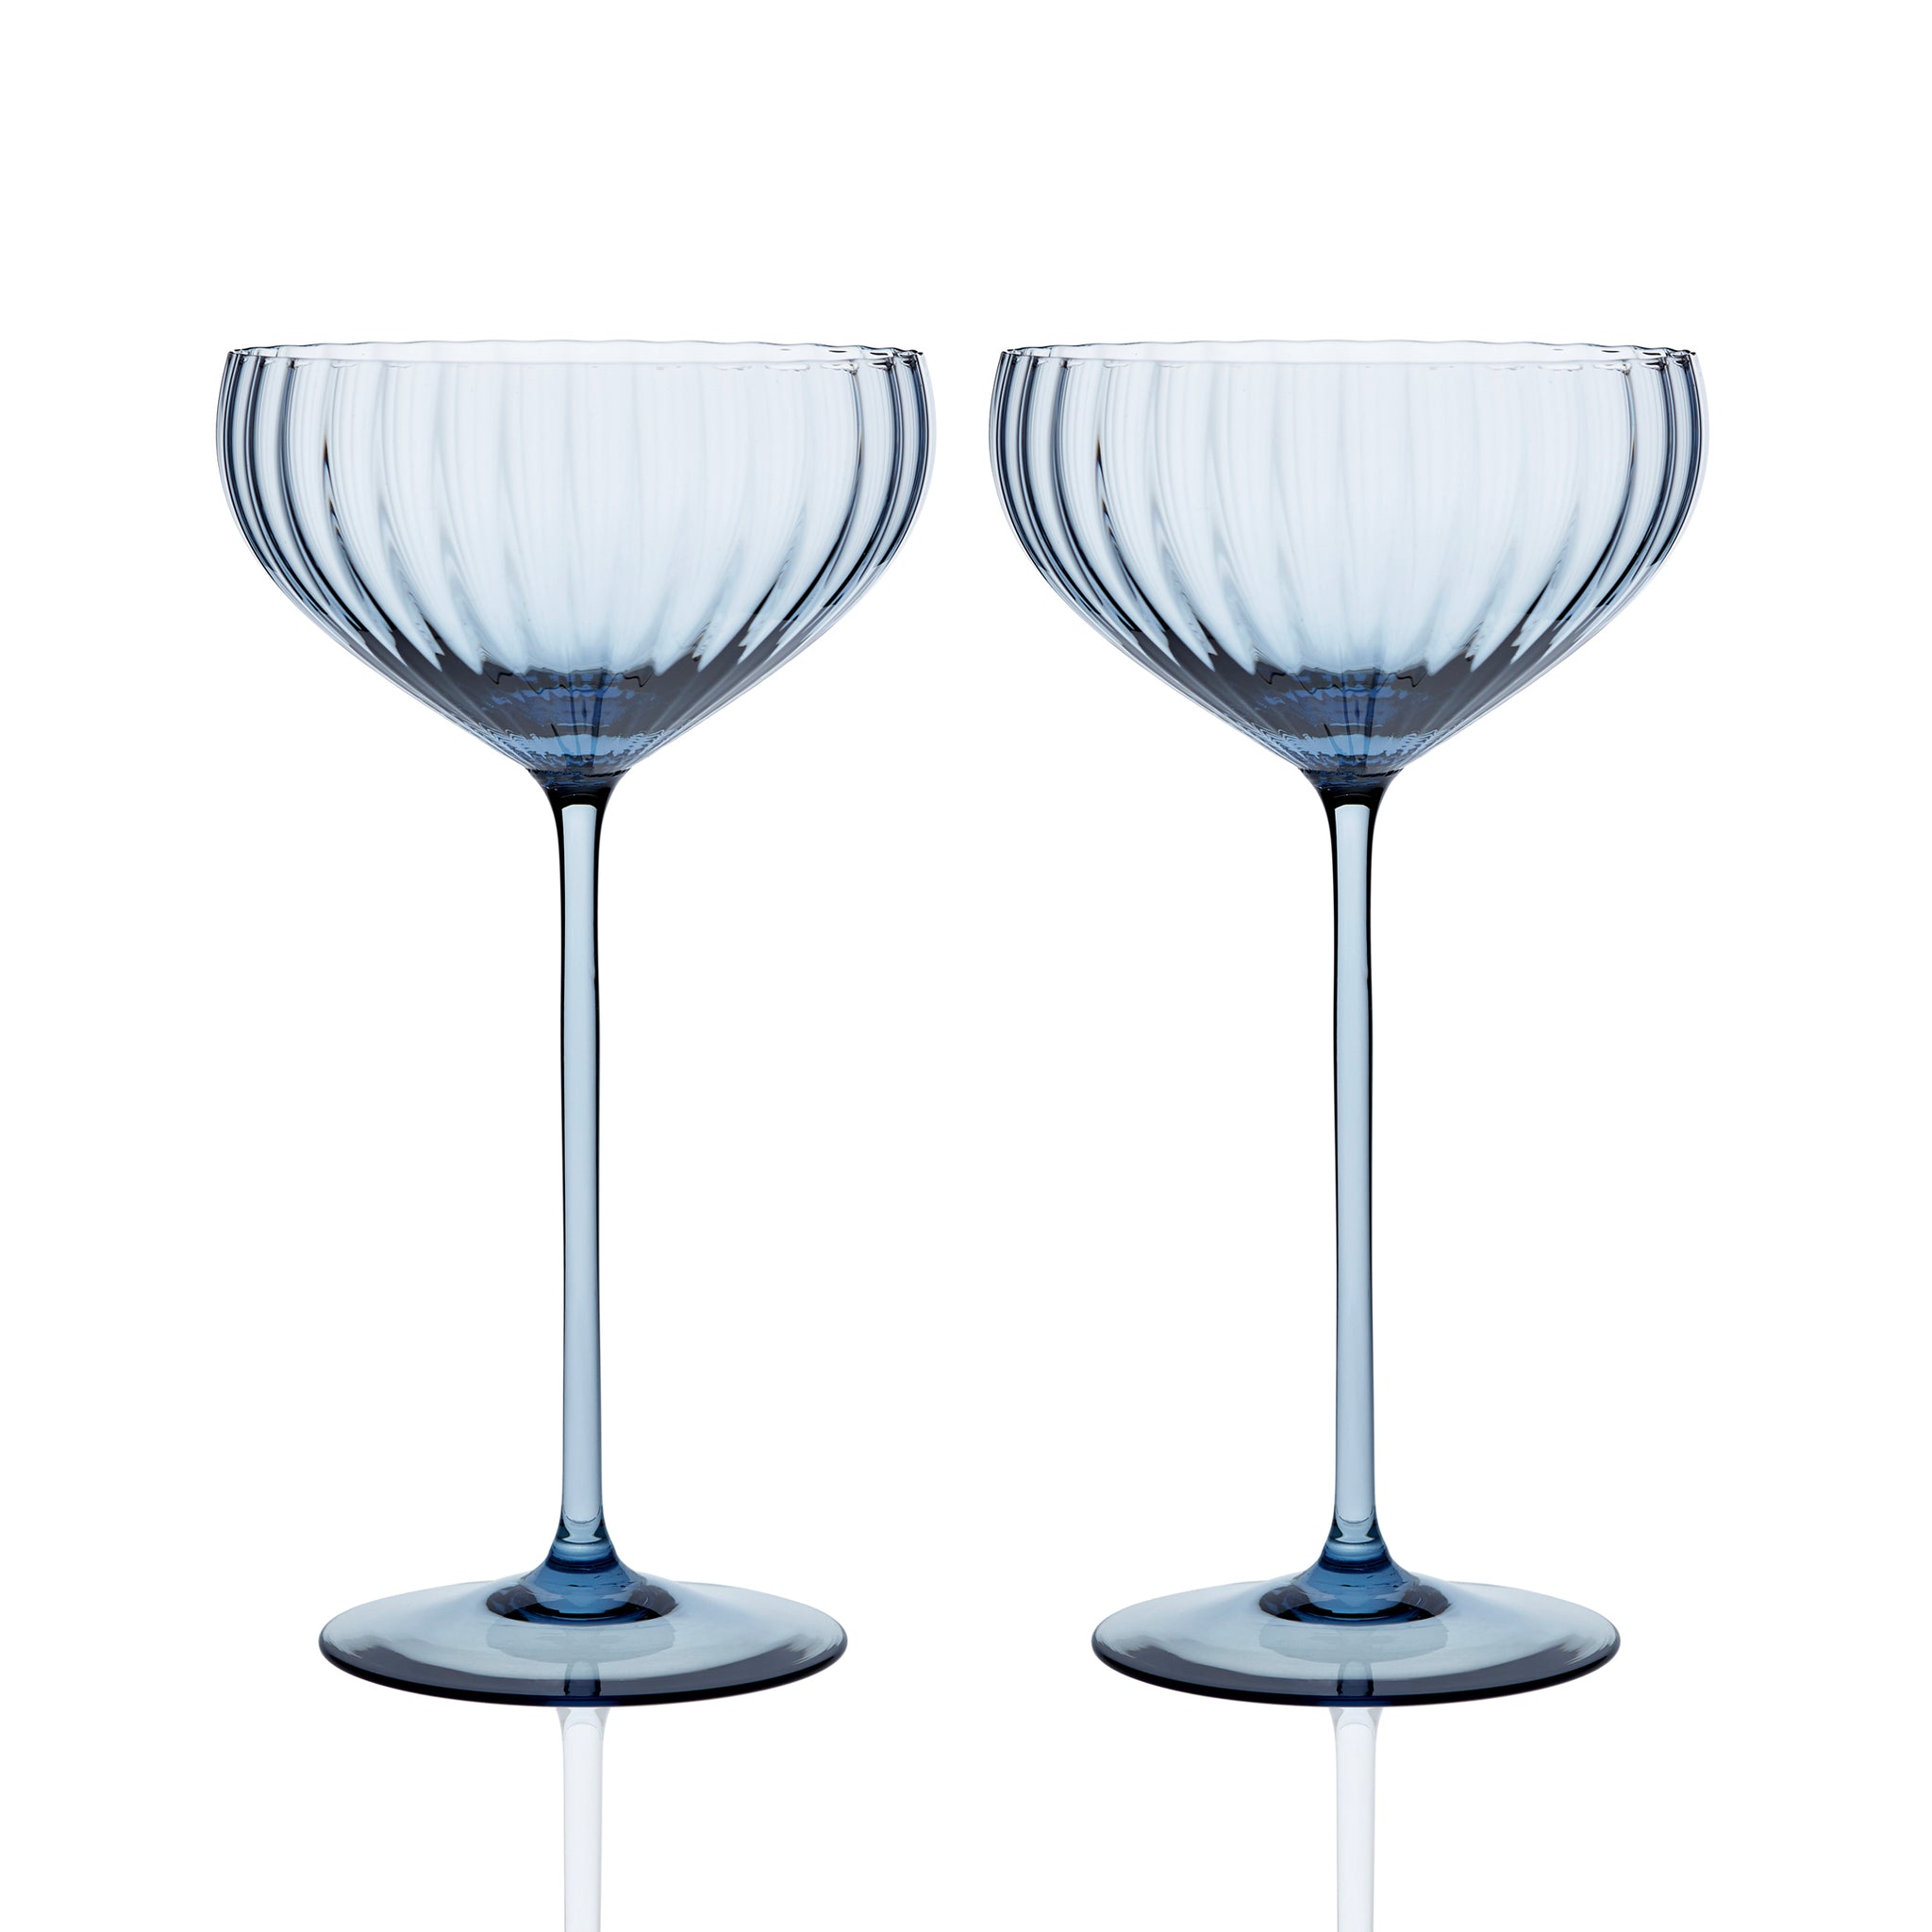 Caskata Cealia Coupe Glasses, Set of 2, Mouth-Blown Glass